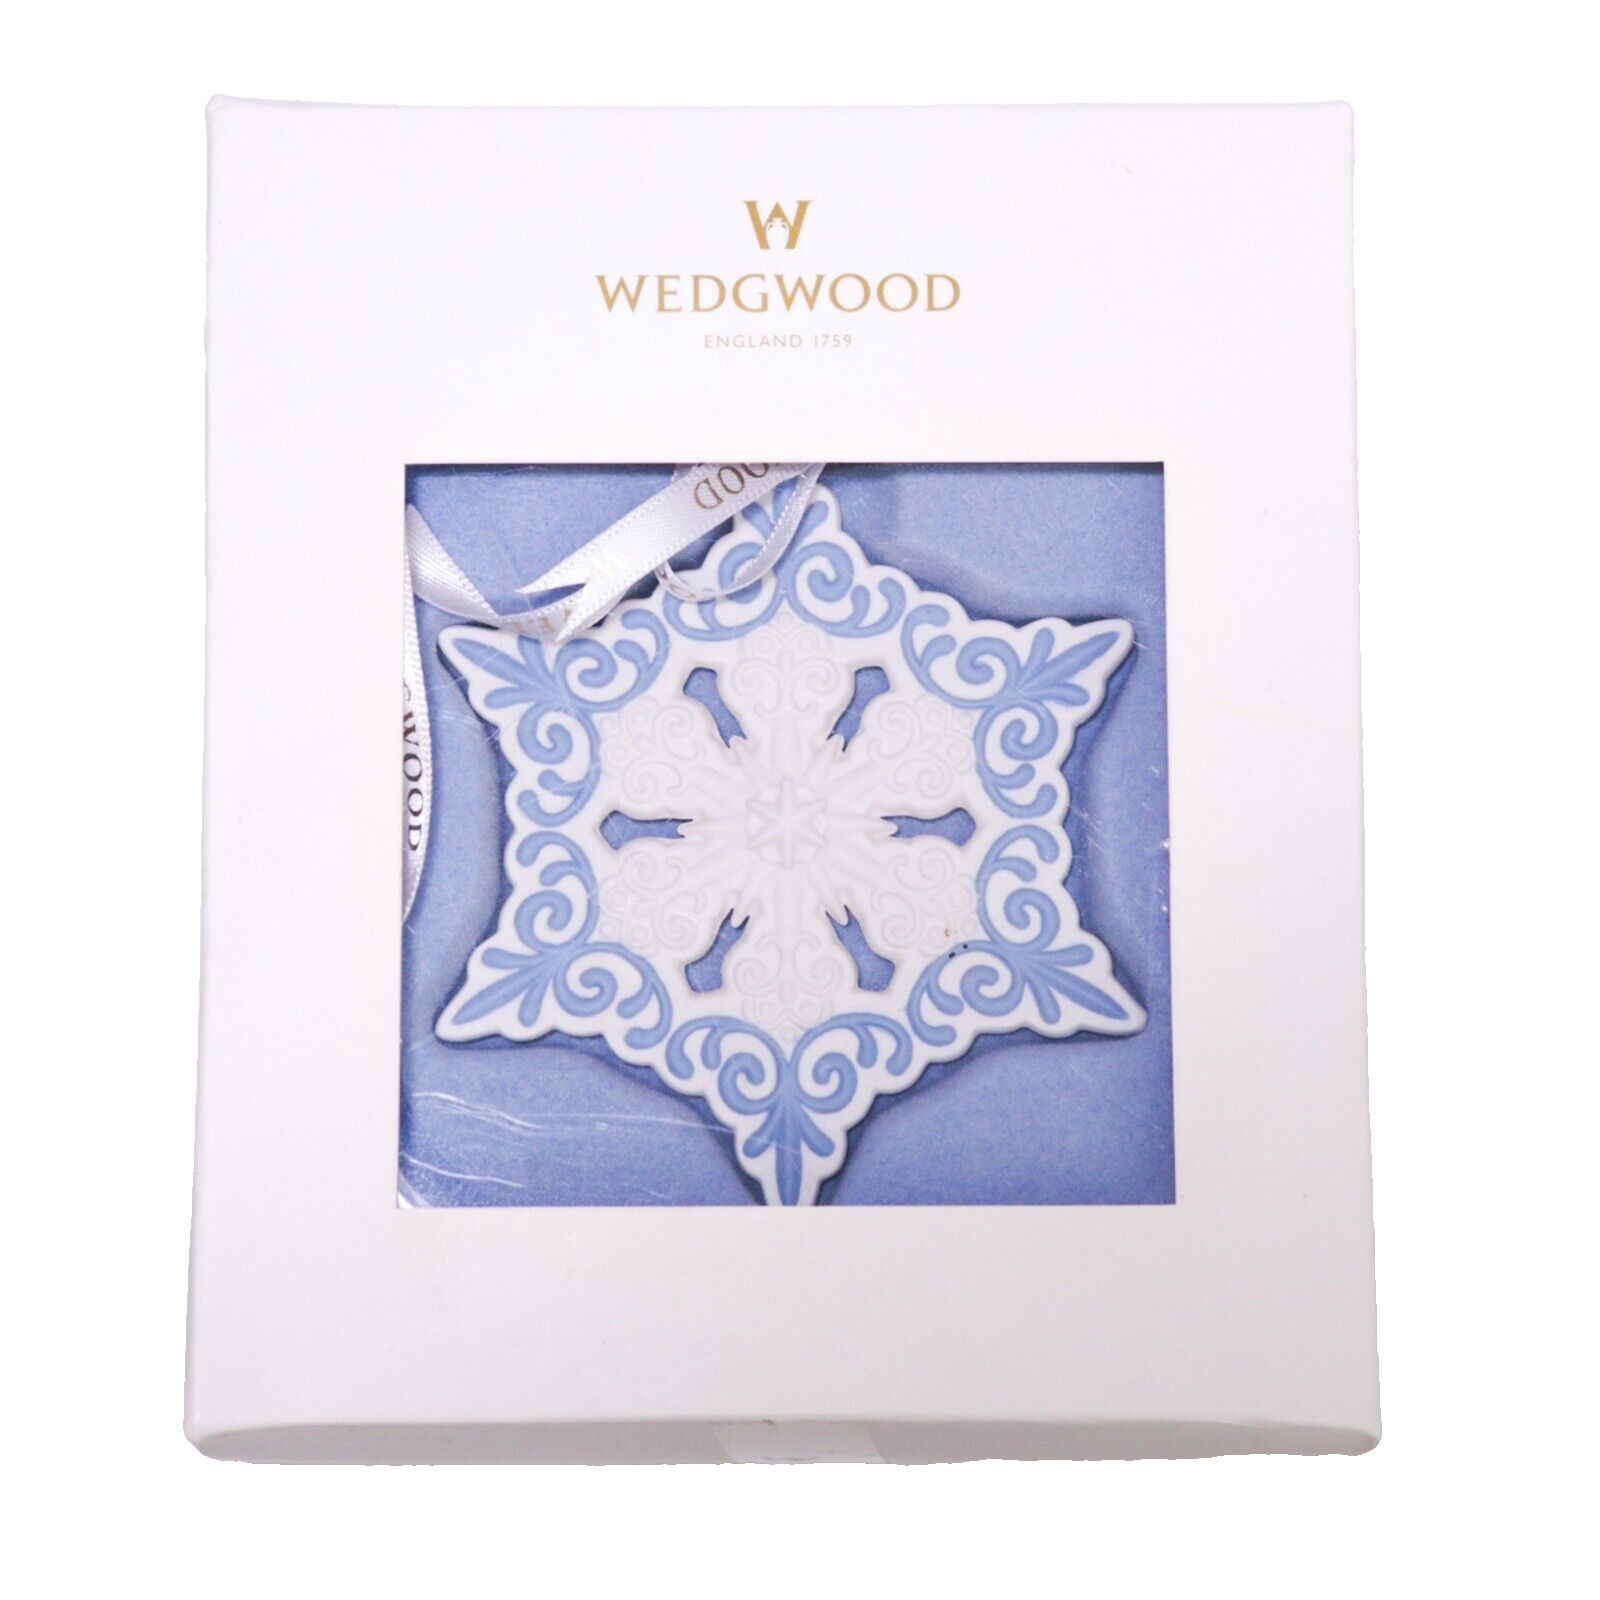 Wedgwood Blue & White Pierced Snowflake Christmas Tree Ornament from England